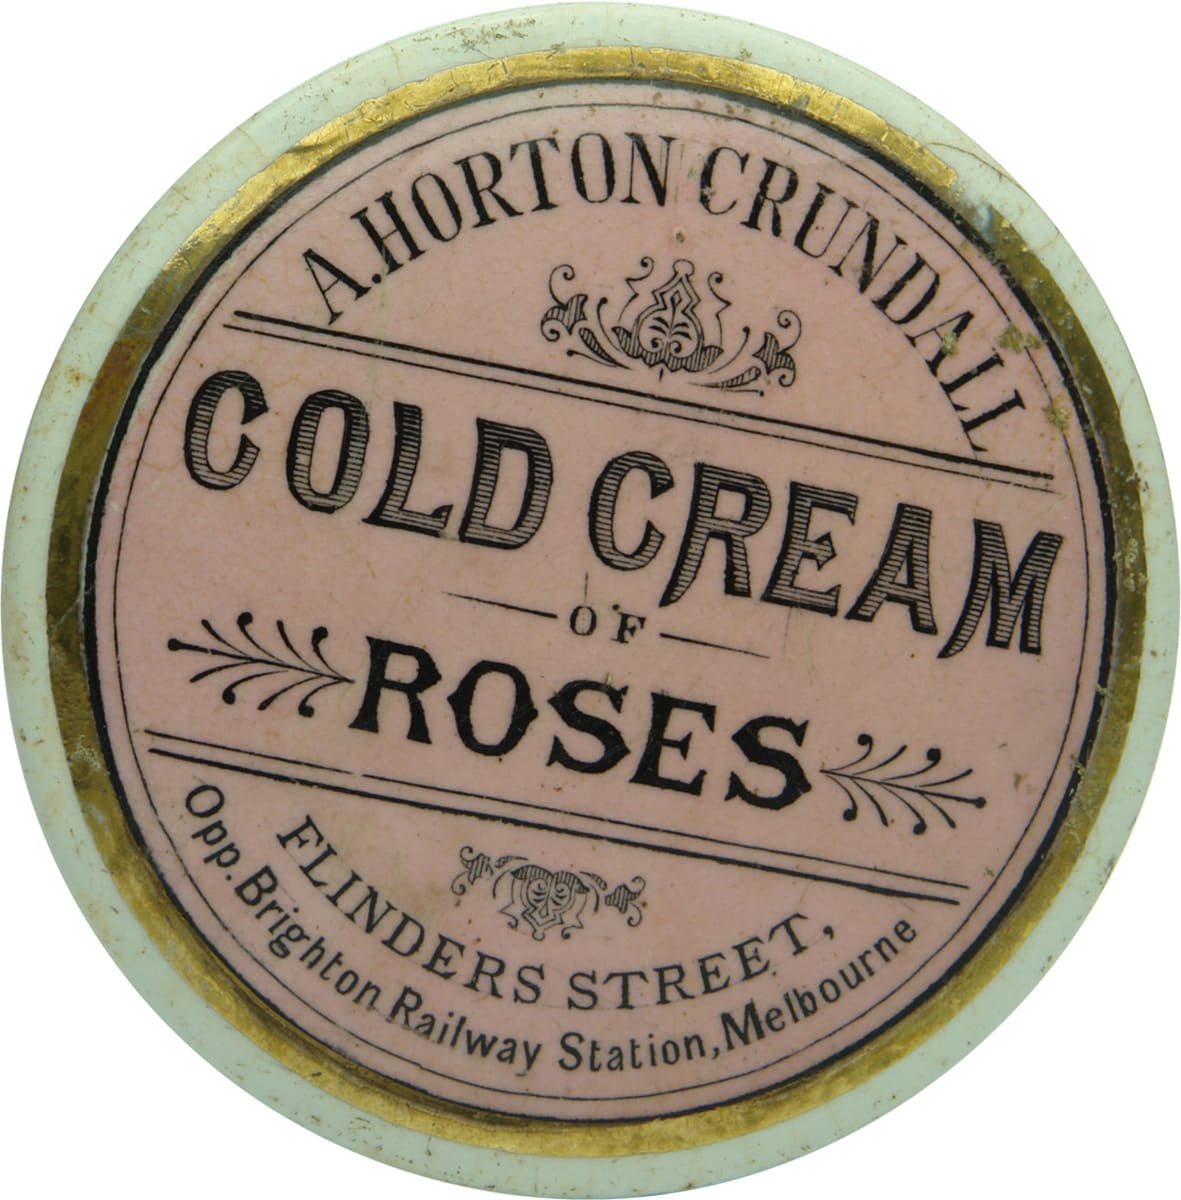 Horton Crundall Cold Cream Roses Melbourne Pot Lid